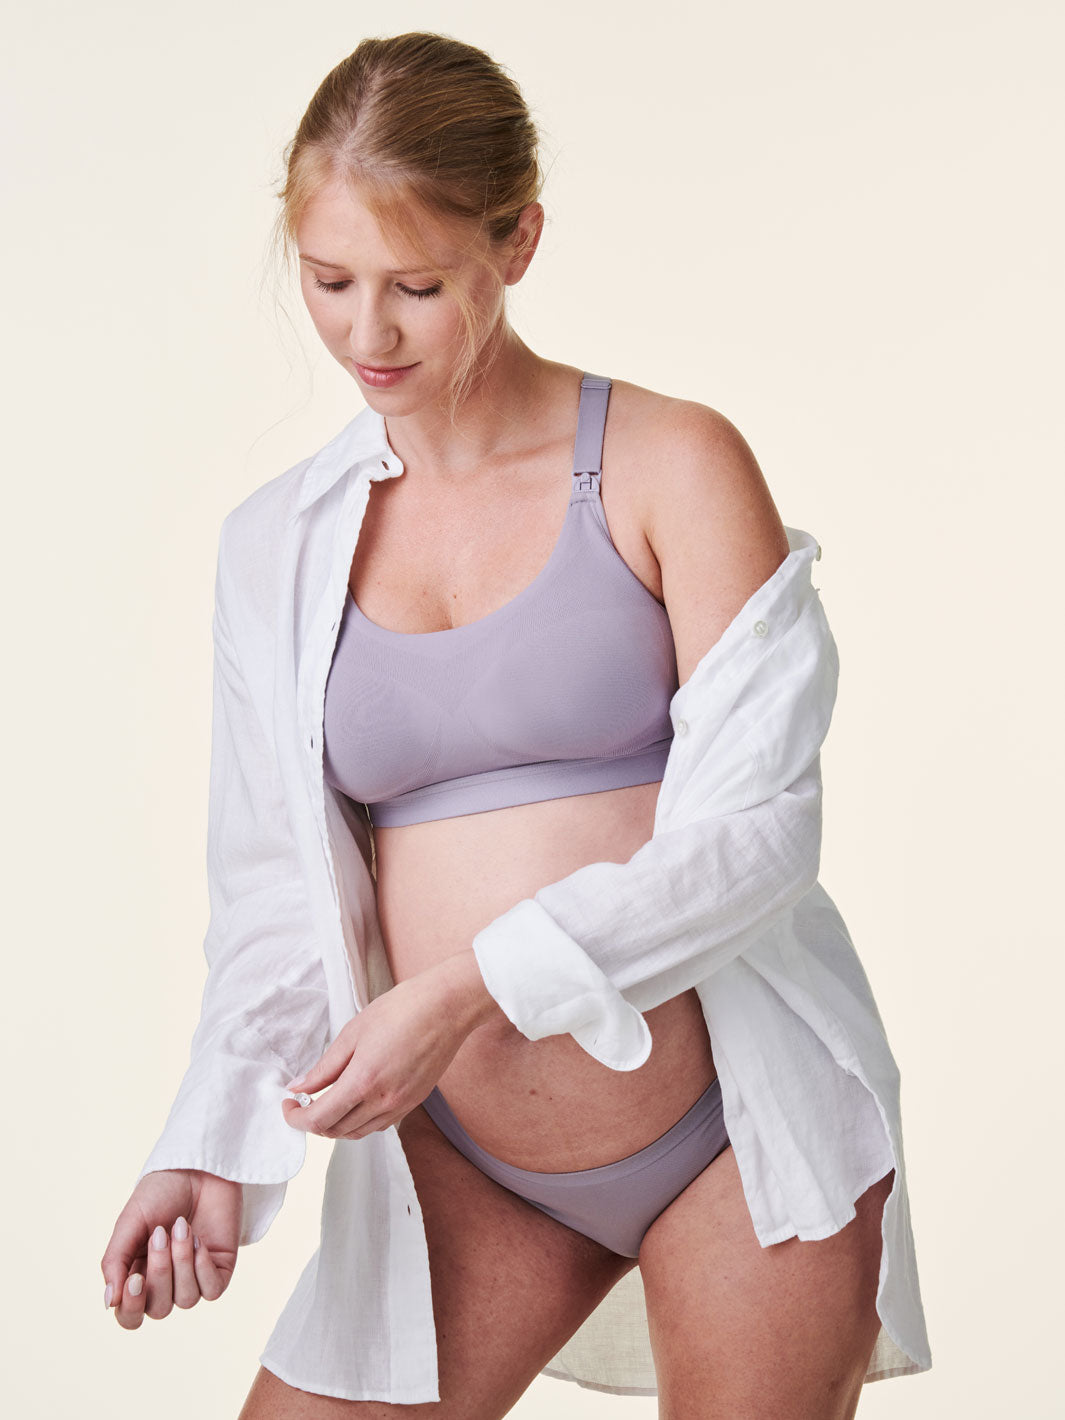 EHQJNJ Nursing Bras for Breastfeeding Sports Bra No Wire Comfort